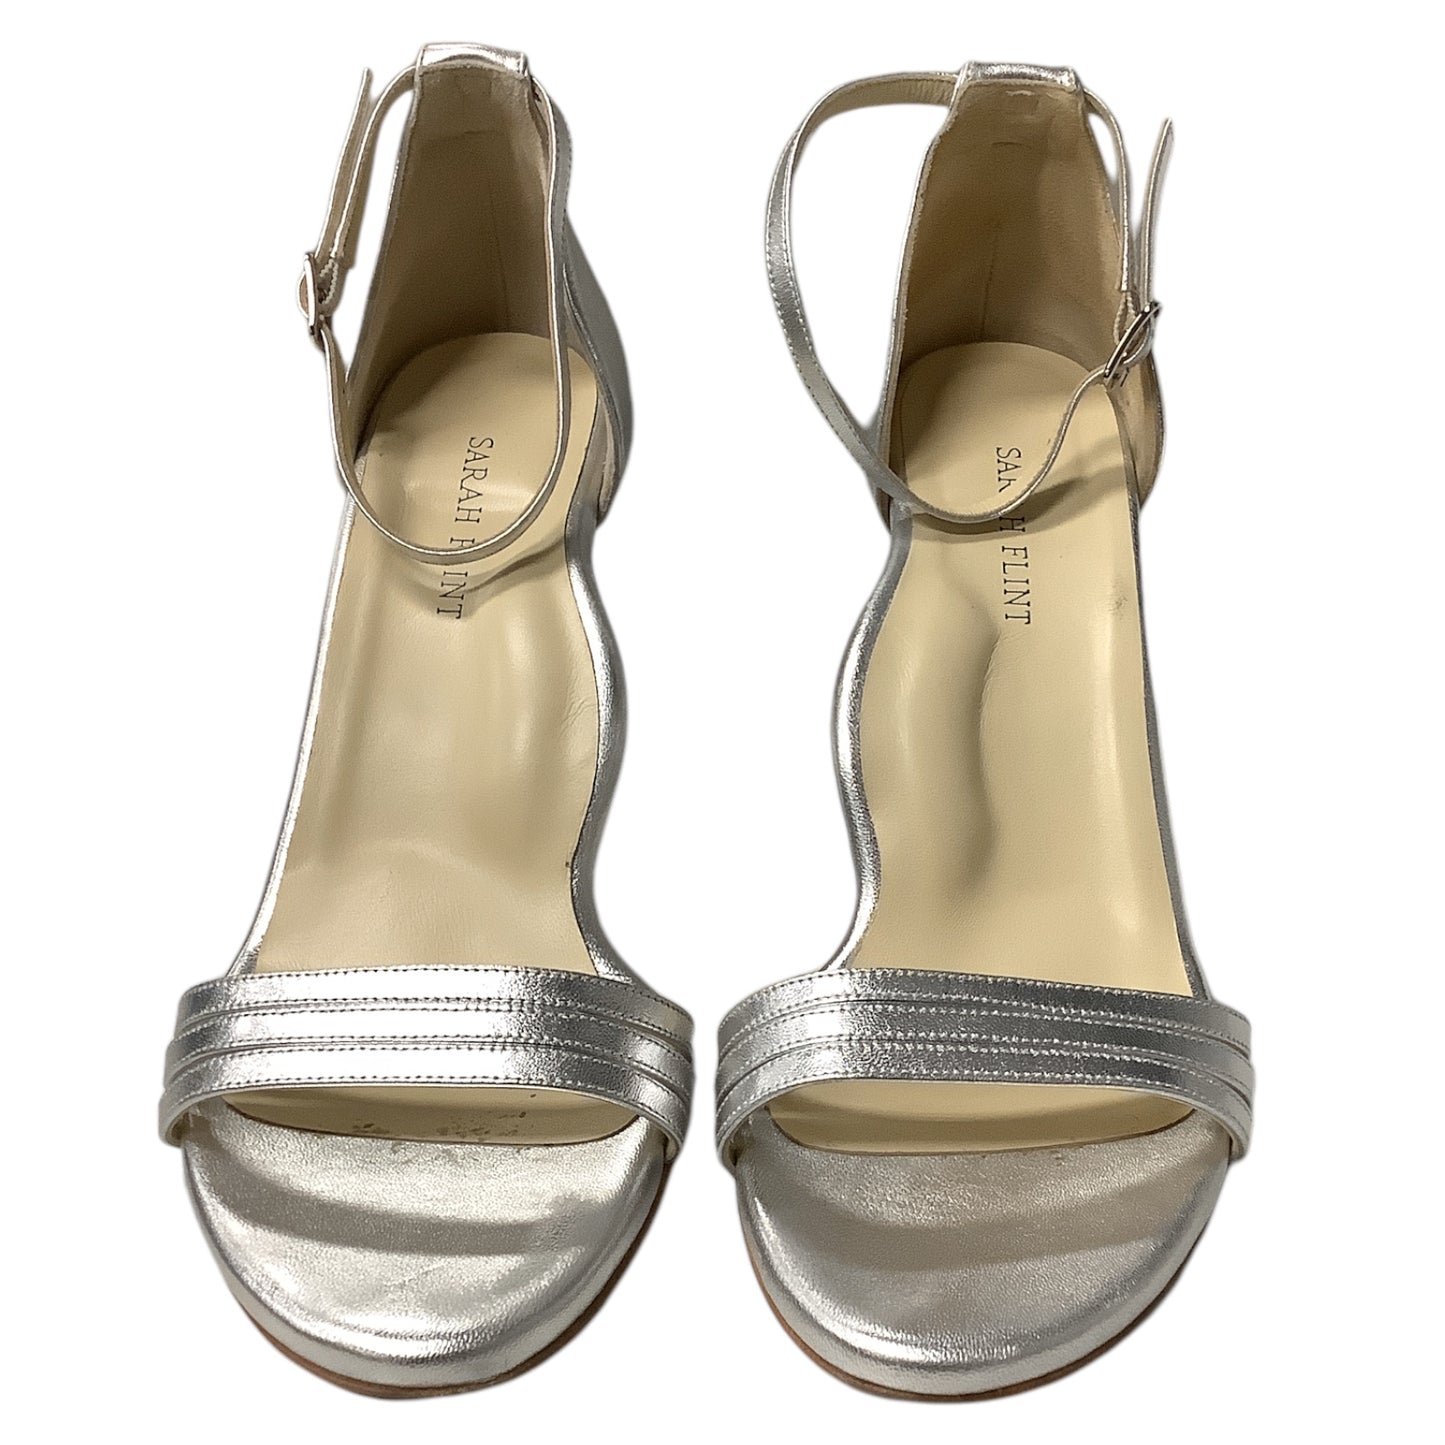 Shoes Heels Stiletto By Sarah Flint  Size: 9.5